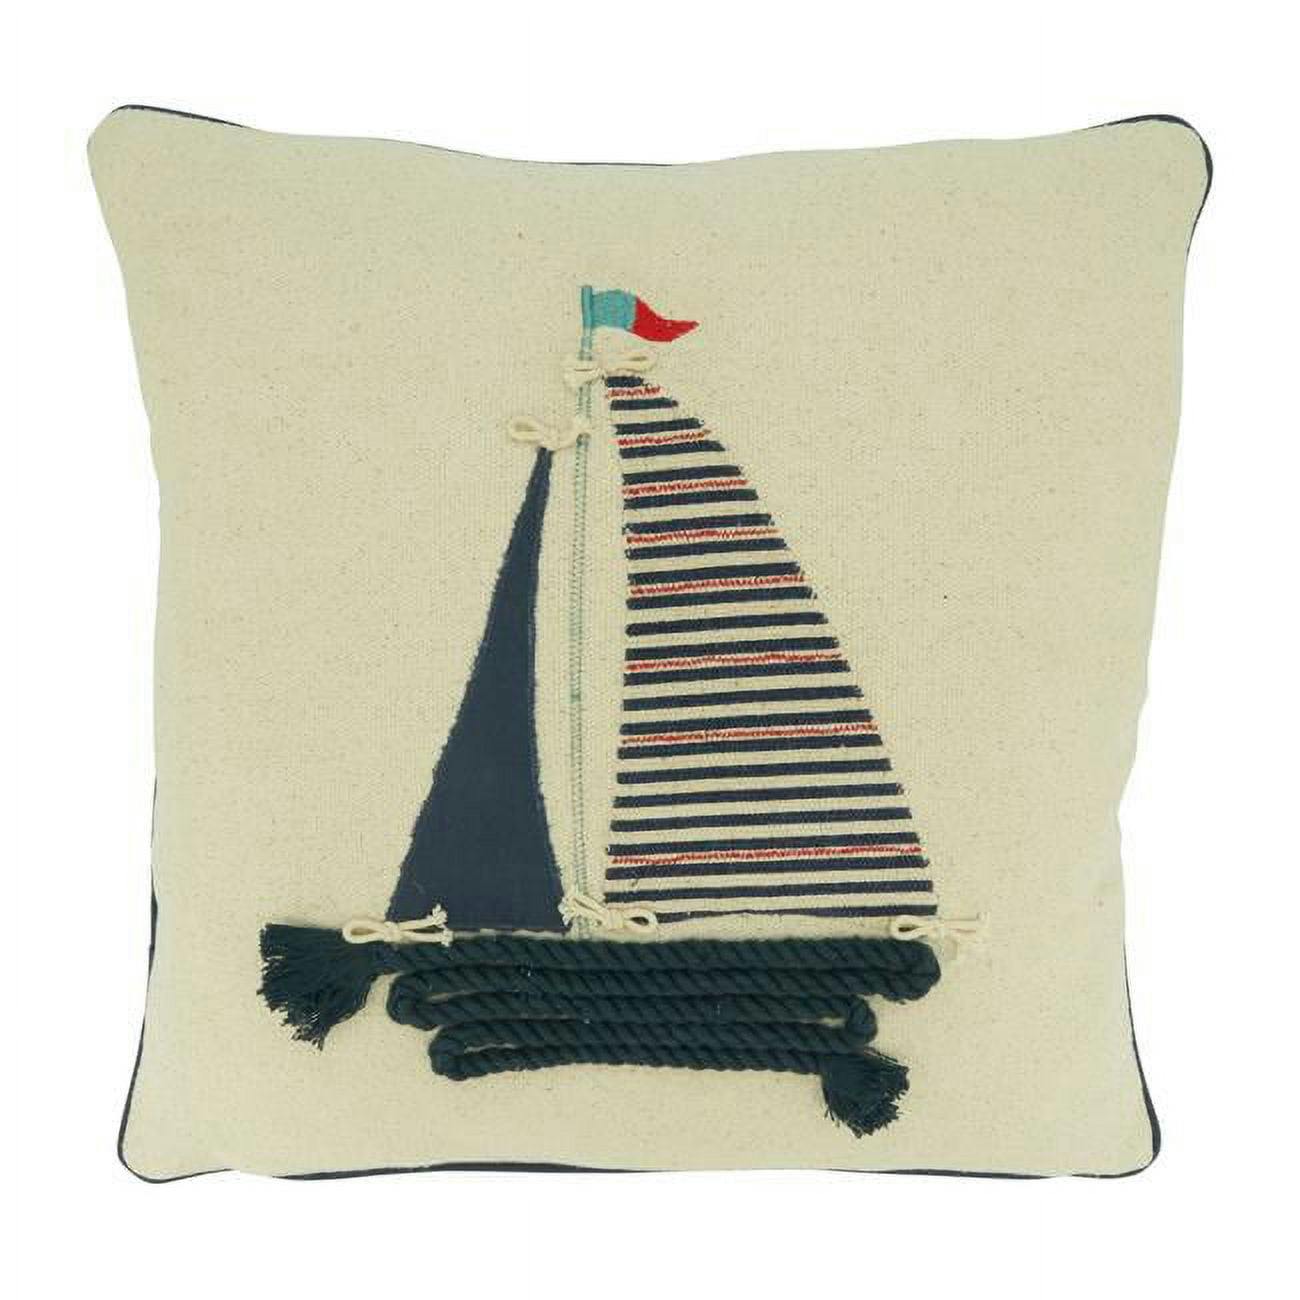 Nautical Charm Cotton Sail Boat Appliqué Euro Pillow Cover, Blue and Cream